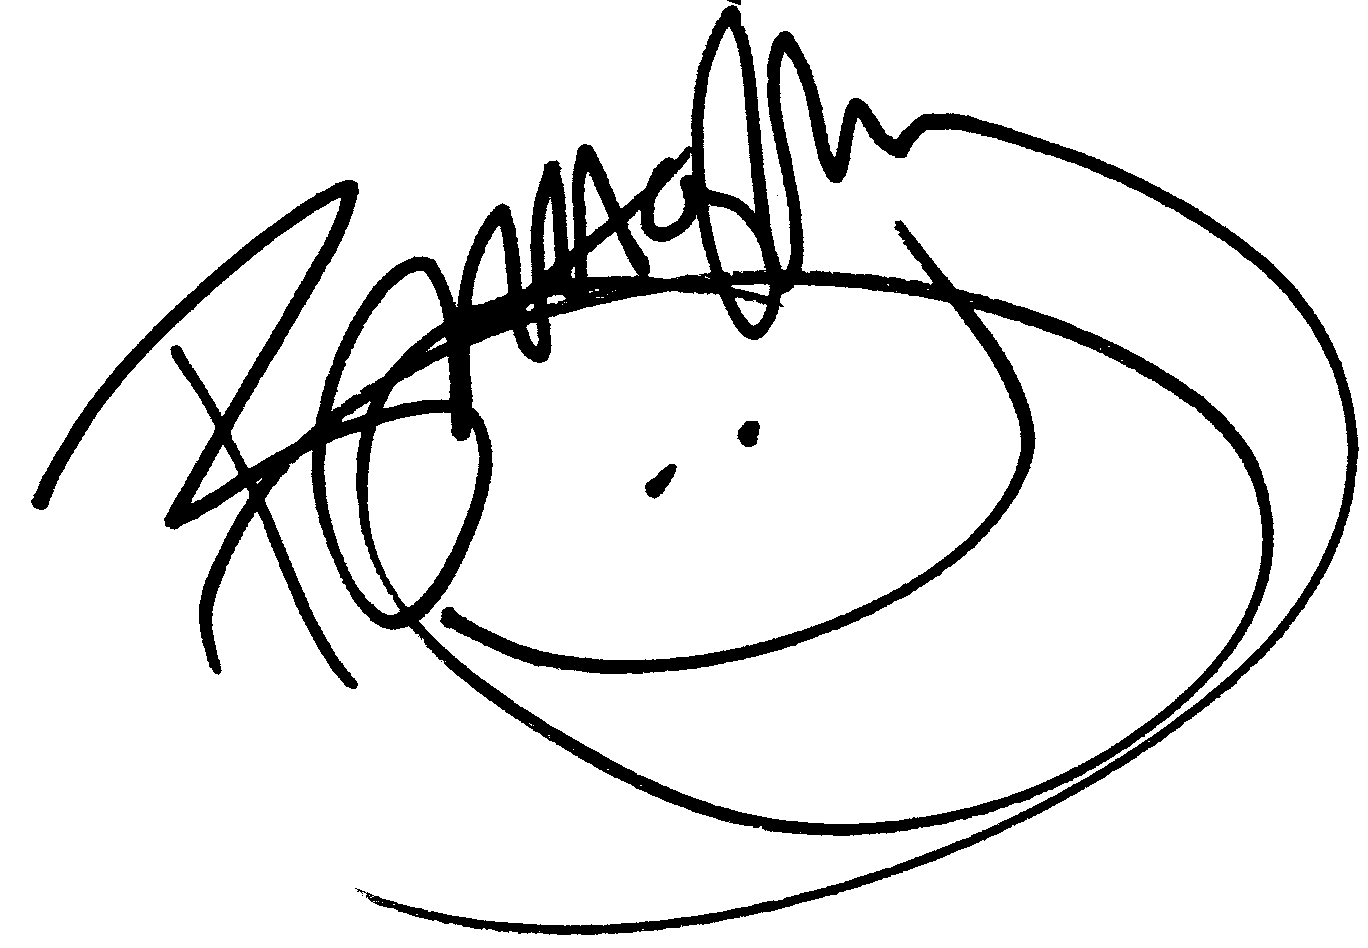 Brittany Murphy autograph facsimile